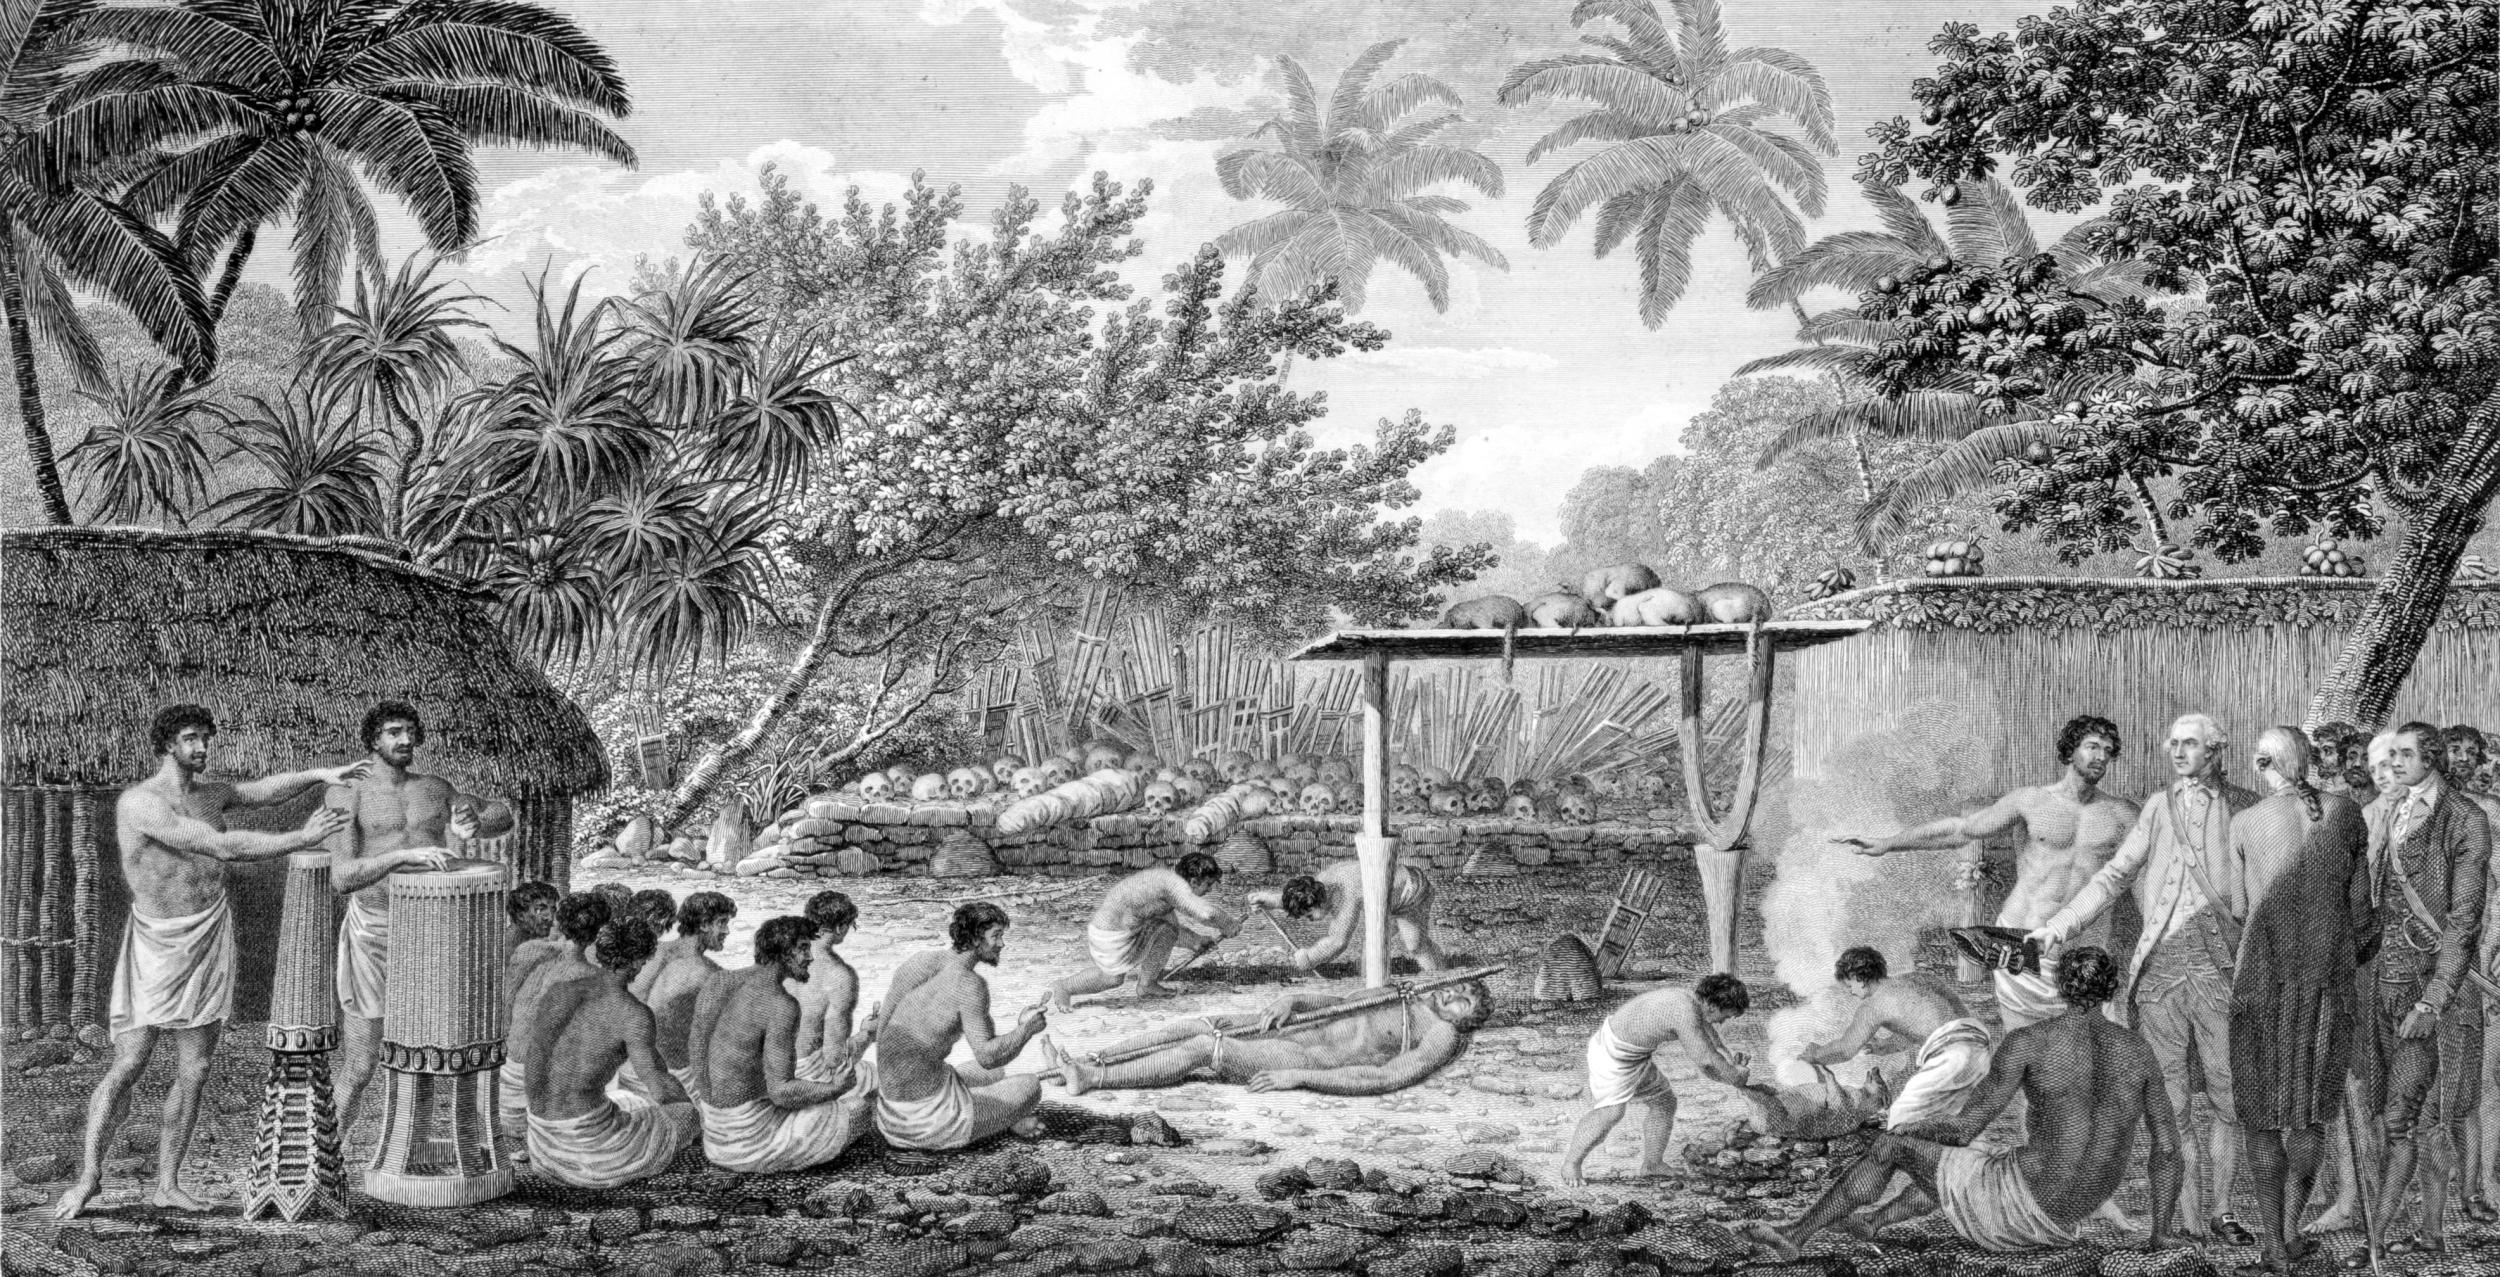 James Cook witnessing human sacrifice in Tahiti c. 1773